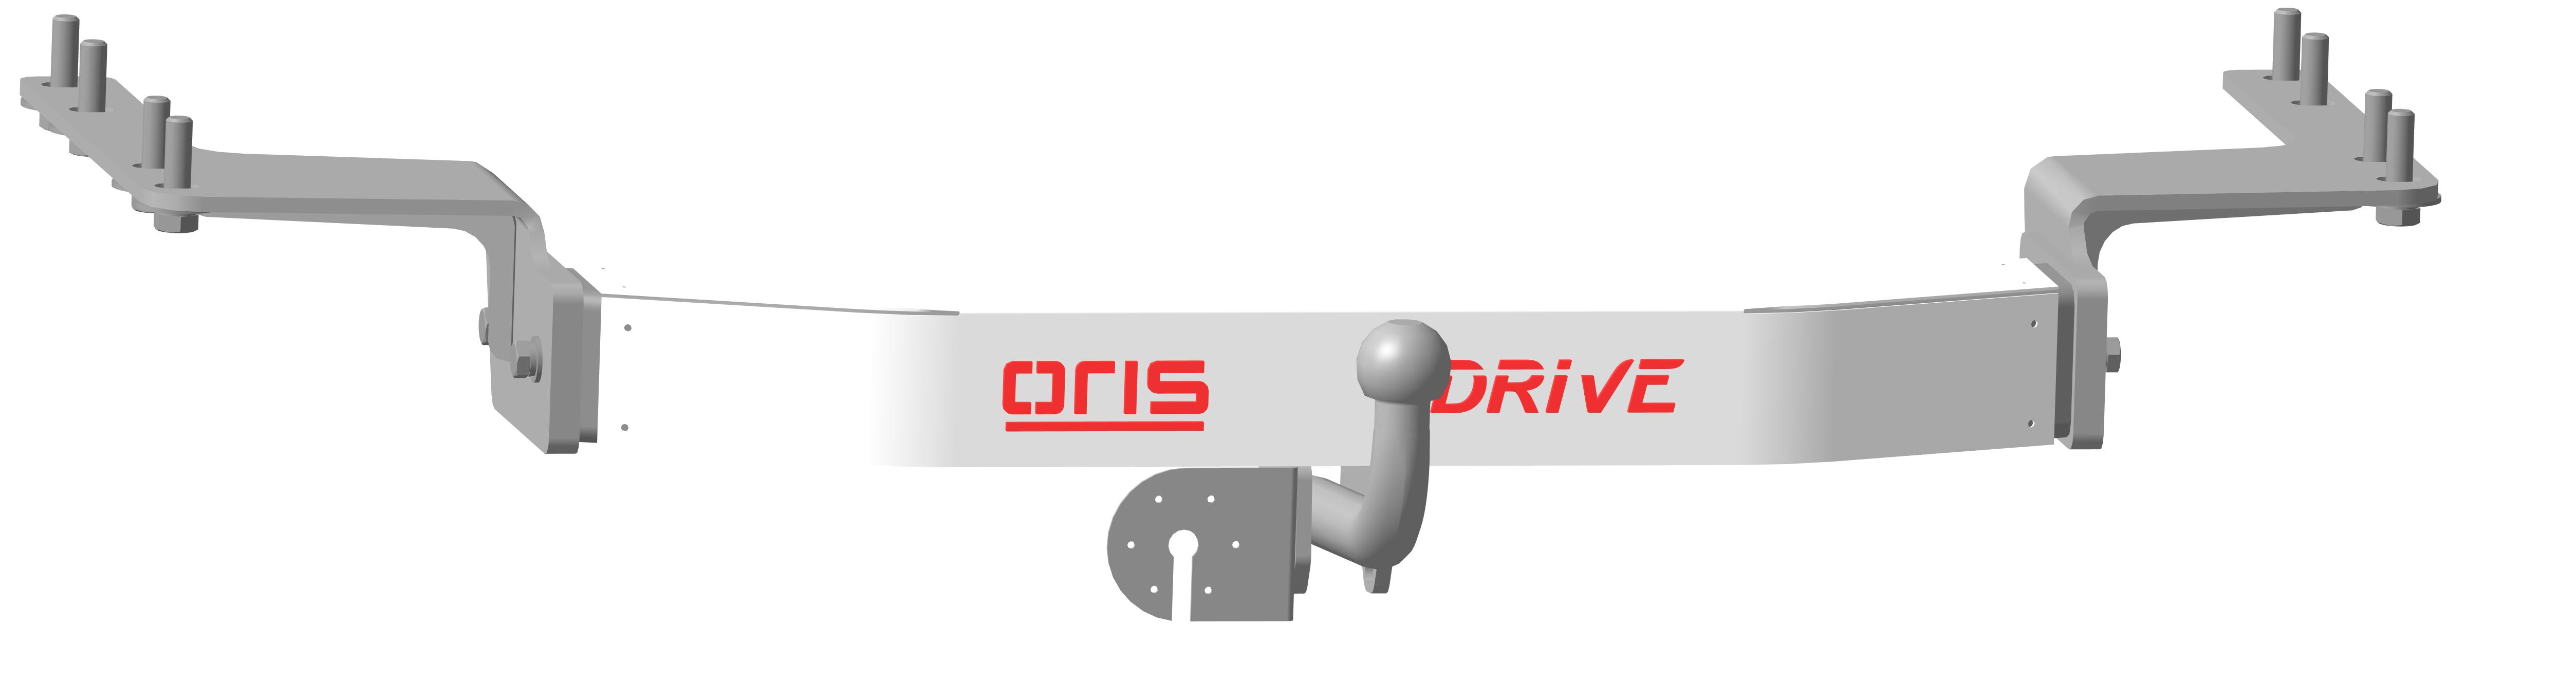 3032-AOD ТСУ со светящейся надписью "ORIS DRIVE" на Toyota Land Cruiser J100, Lexus LX 1998 - 2007